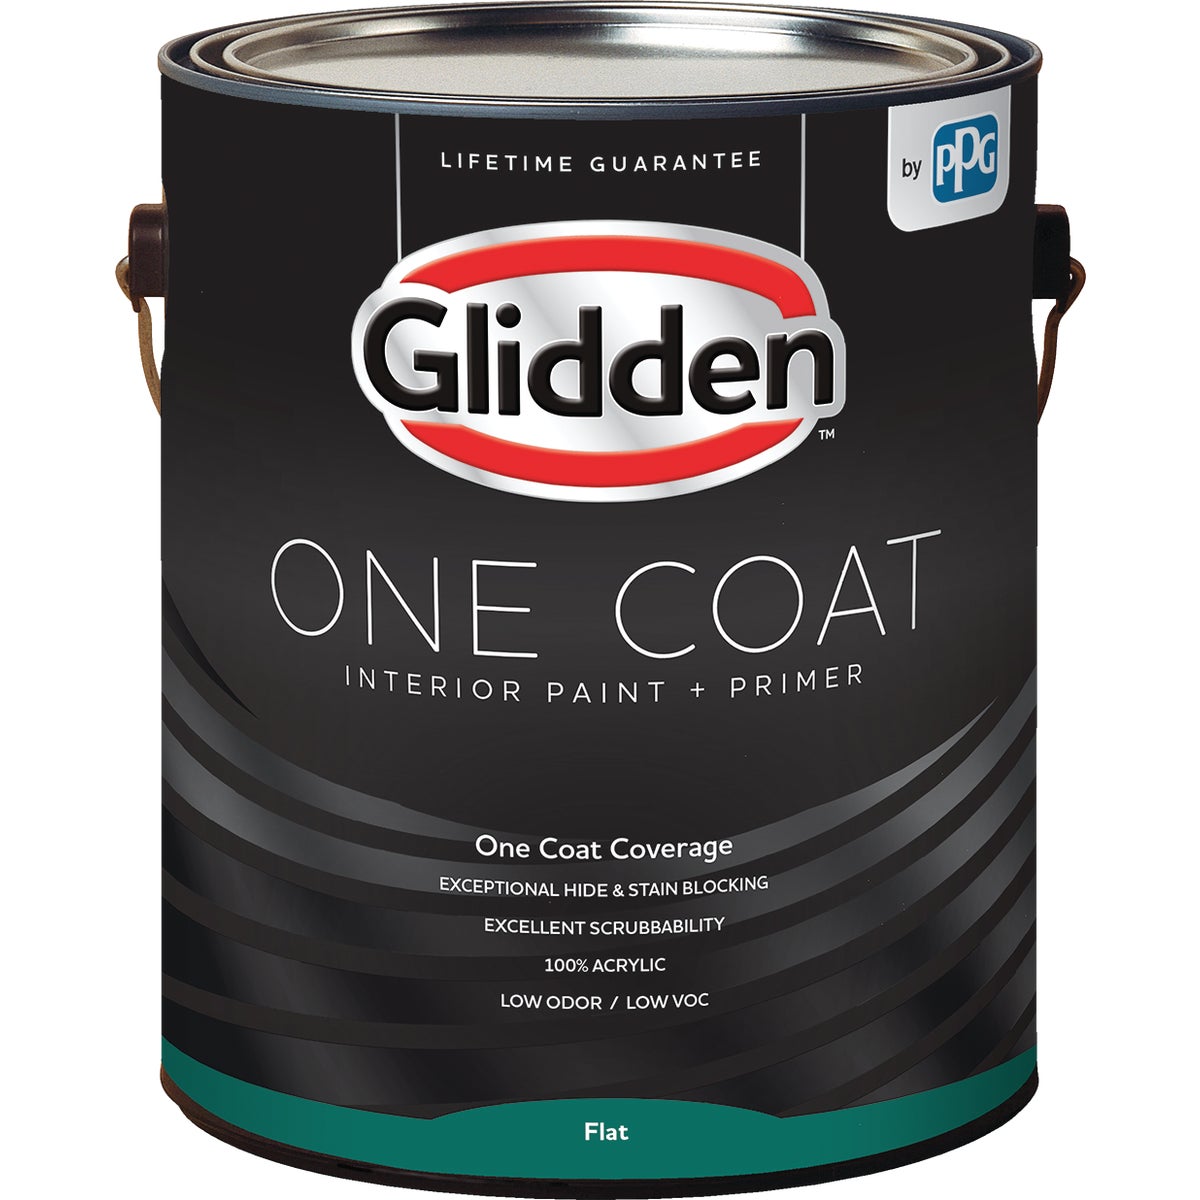 Glidden One Coat Interior Paint + Primer Flat White & Pastel Base 1 Gallon